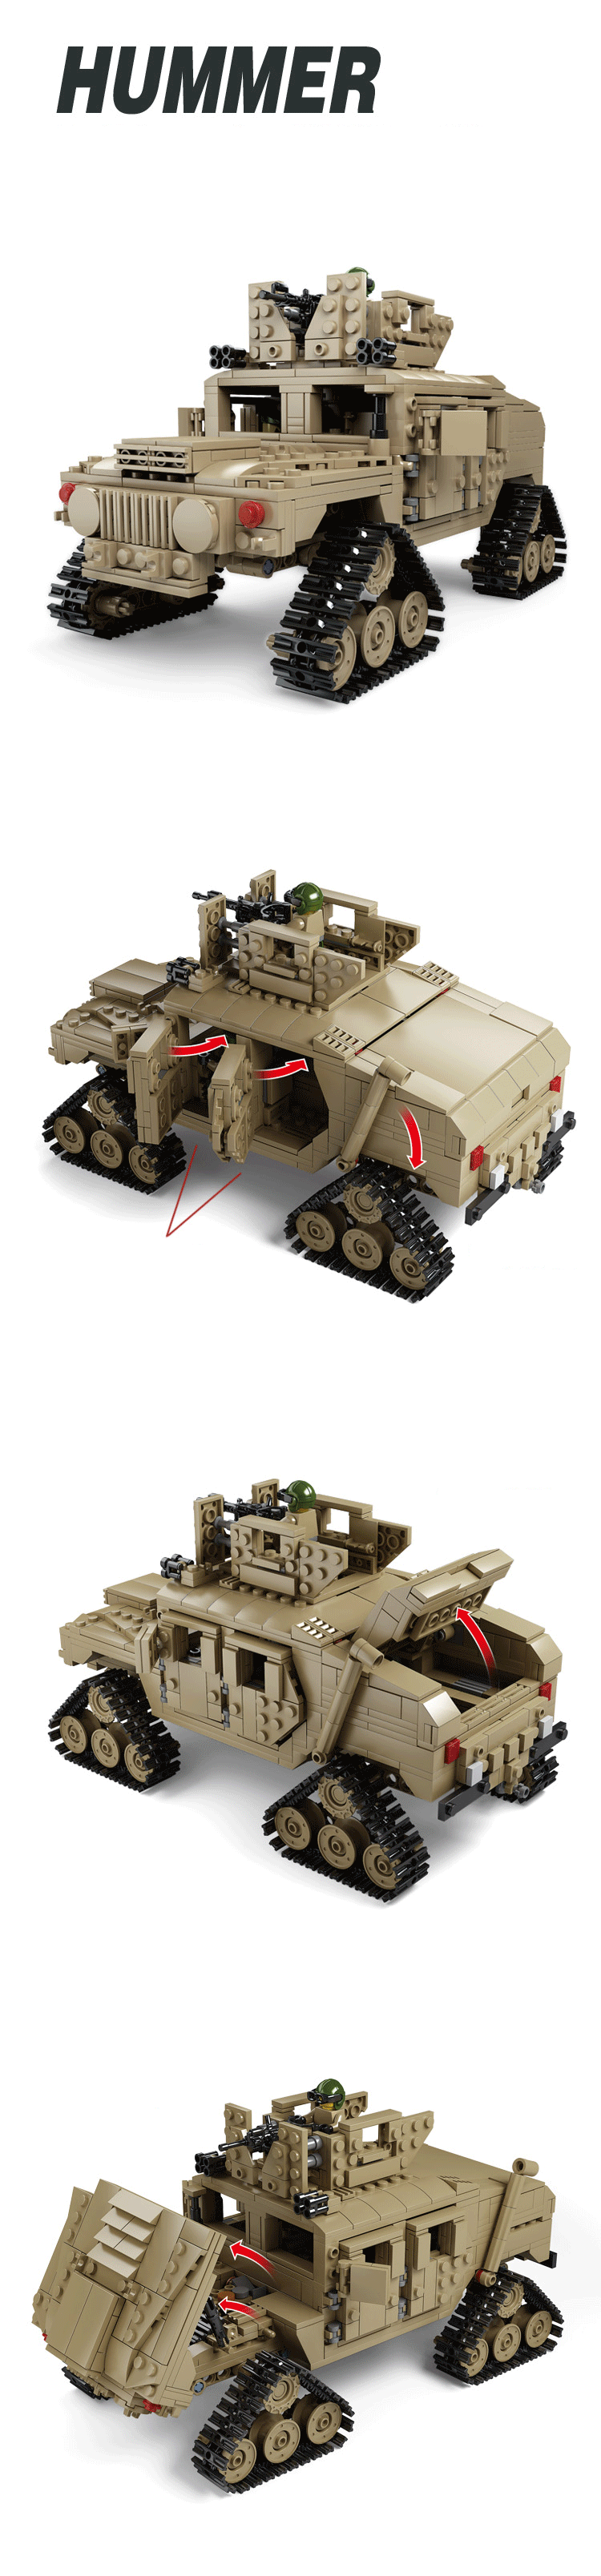 New-Theme-Tank-Building-Blocks-1463pcs-Building-Blocks-M1A2-ABRAMS-MBT-KY10000-1-Change-2-Toy-Tank-Models-Toys-For-Children-32861291976